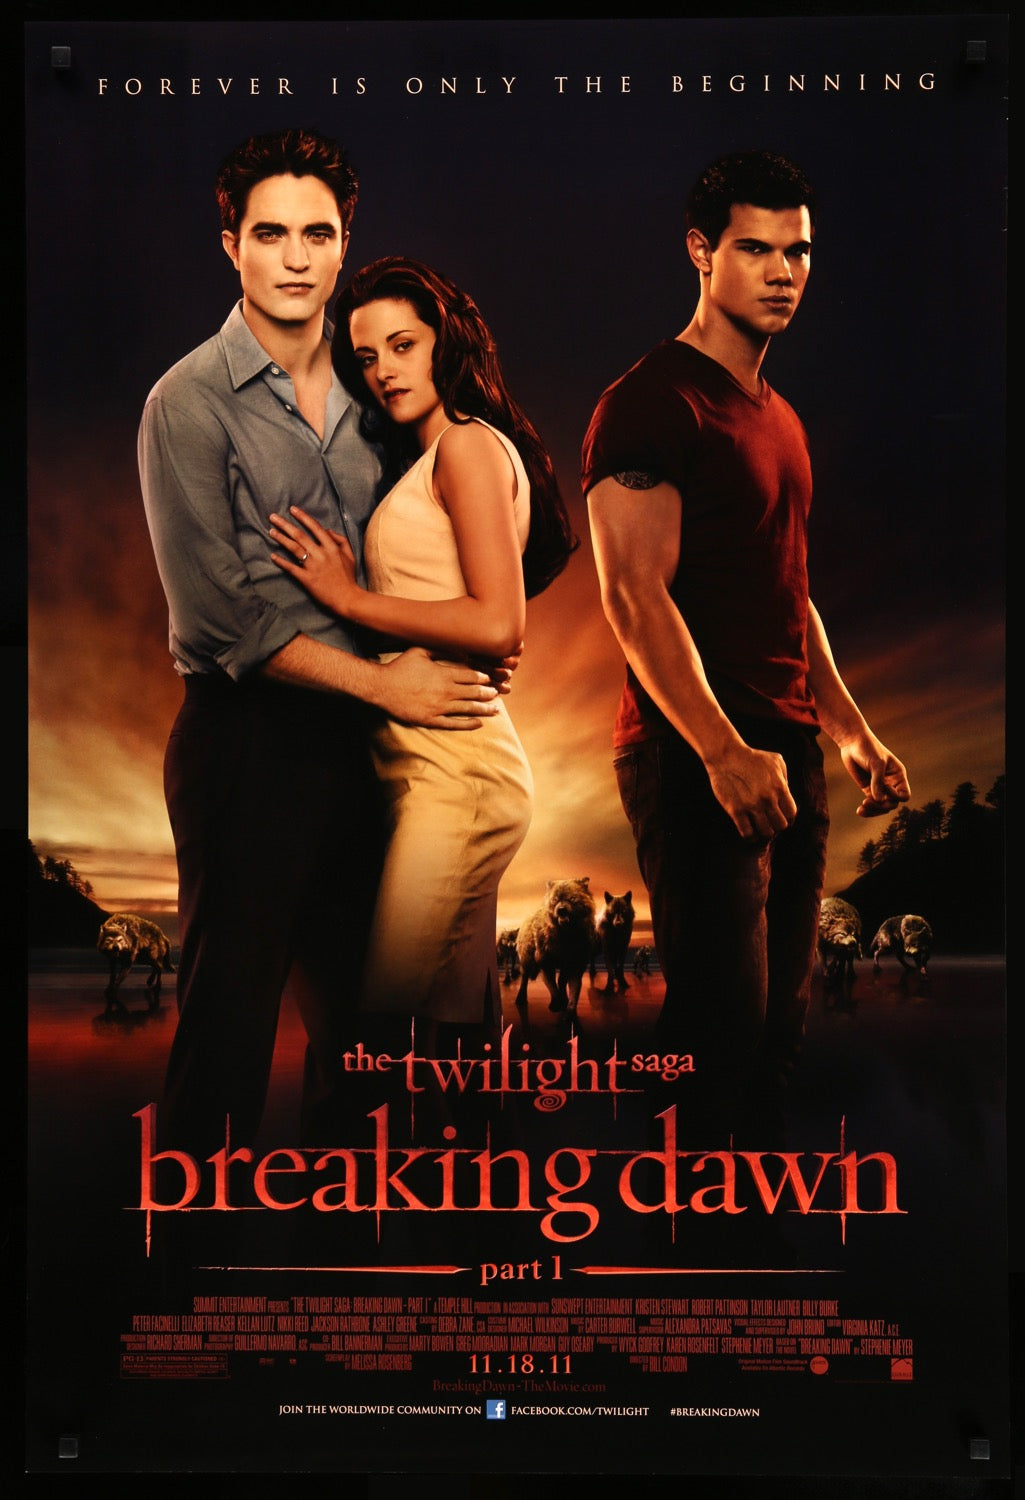 Twilight Saga - Breaking Dawn - Part 1 (2011) original movie poster for sale at Original Film Art